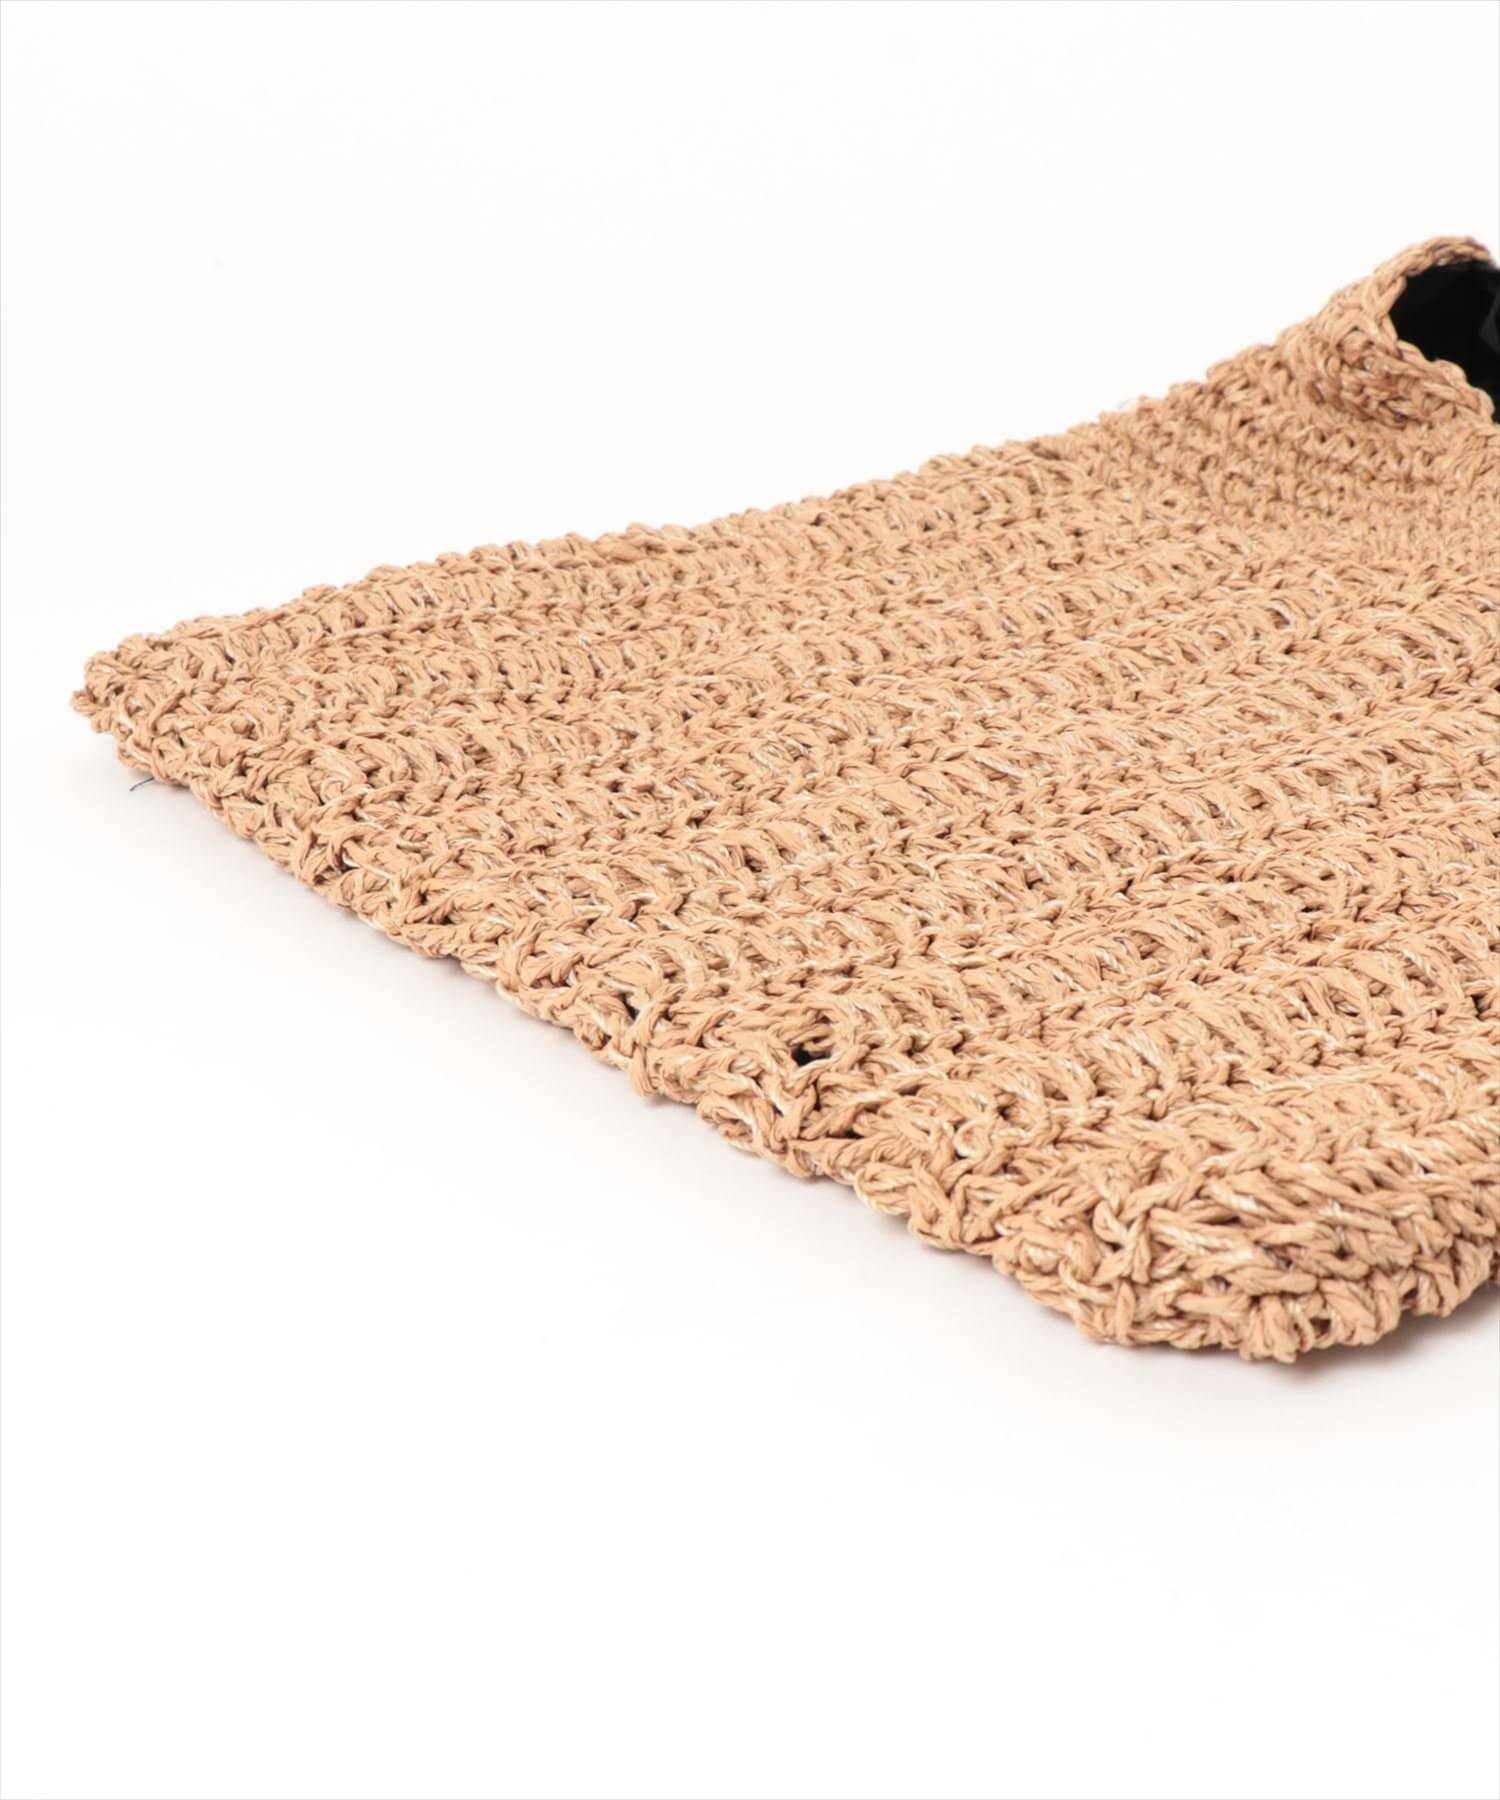 natural couture(ナチュラルクチュール) フリルワンハンドルペーパー手編みトートバッグ